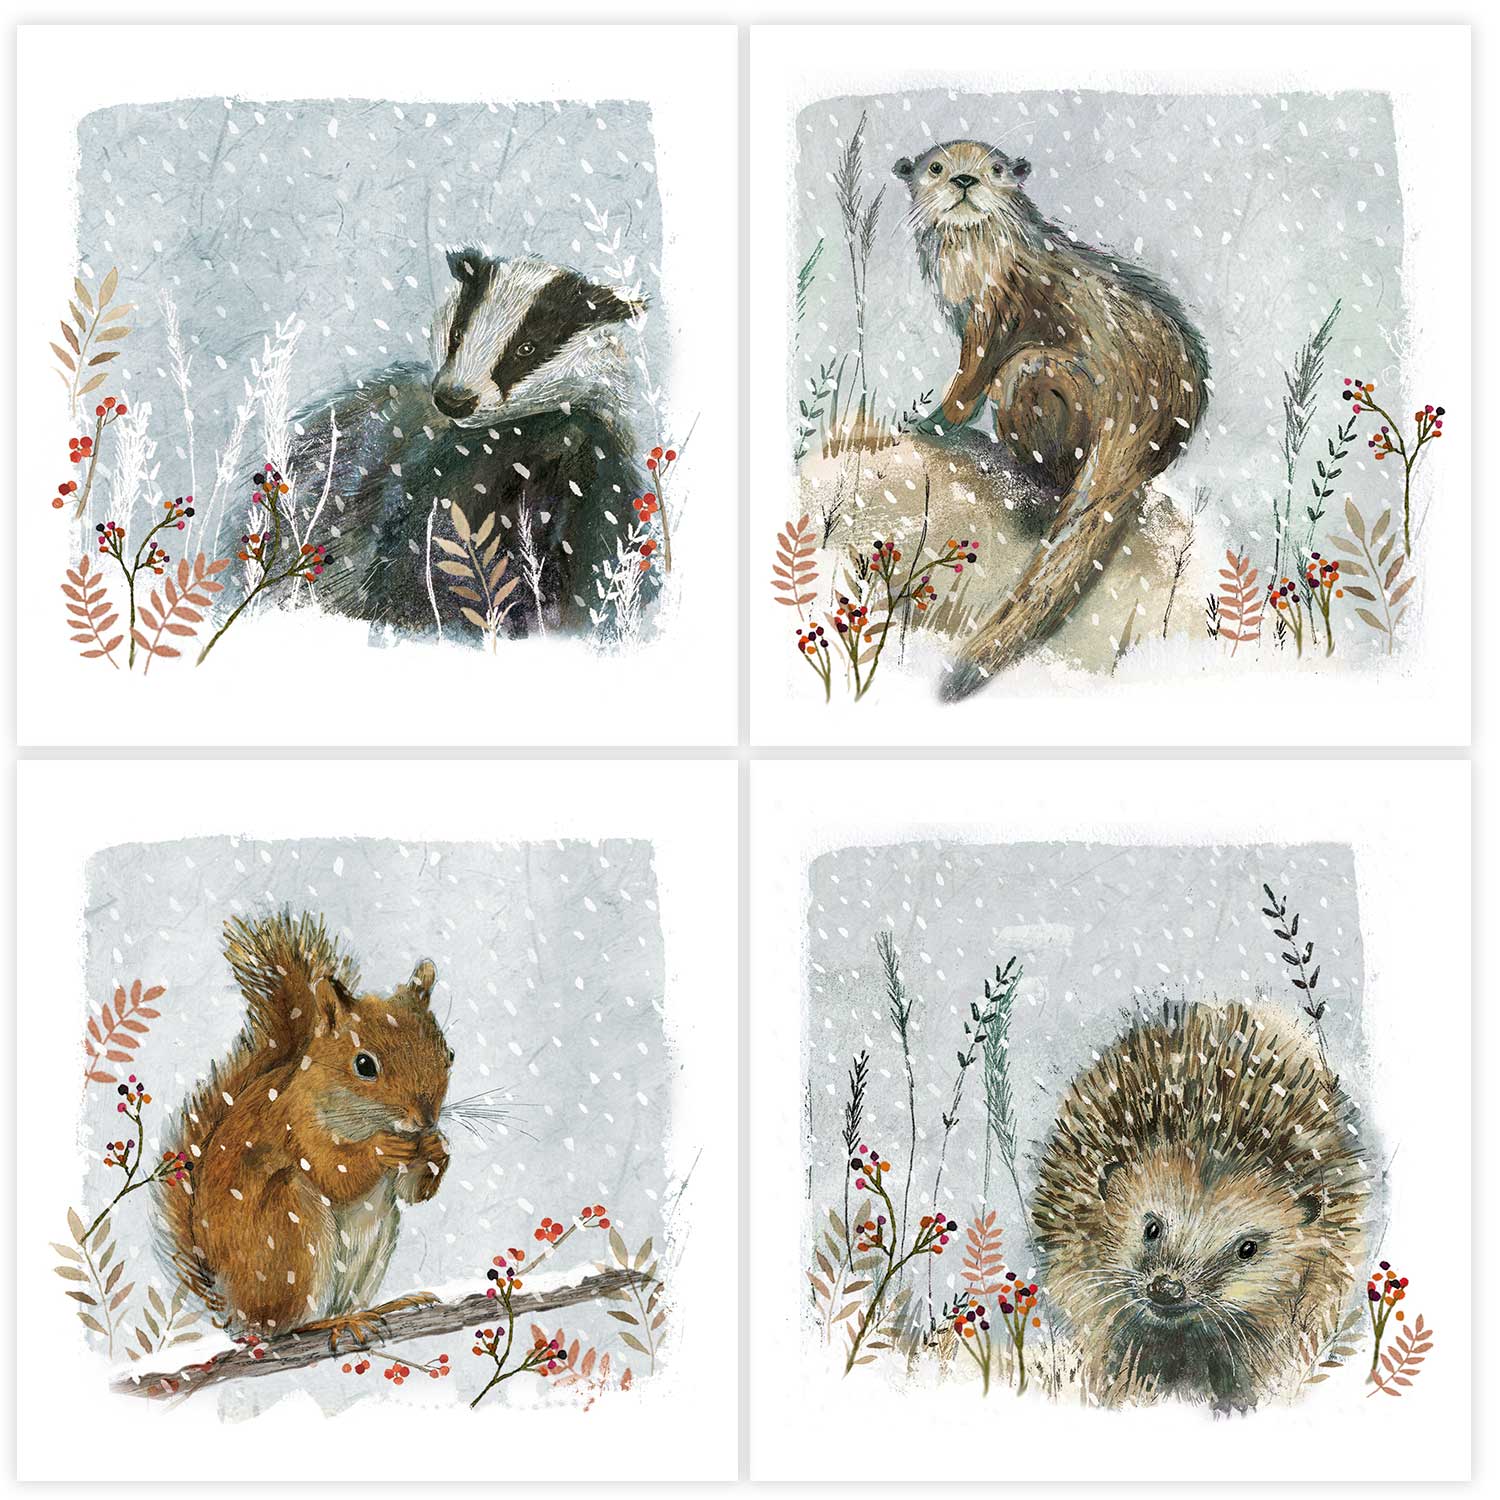 Wondrous wildlife RSPB charity Christmas cards - 20 pack product photo